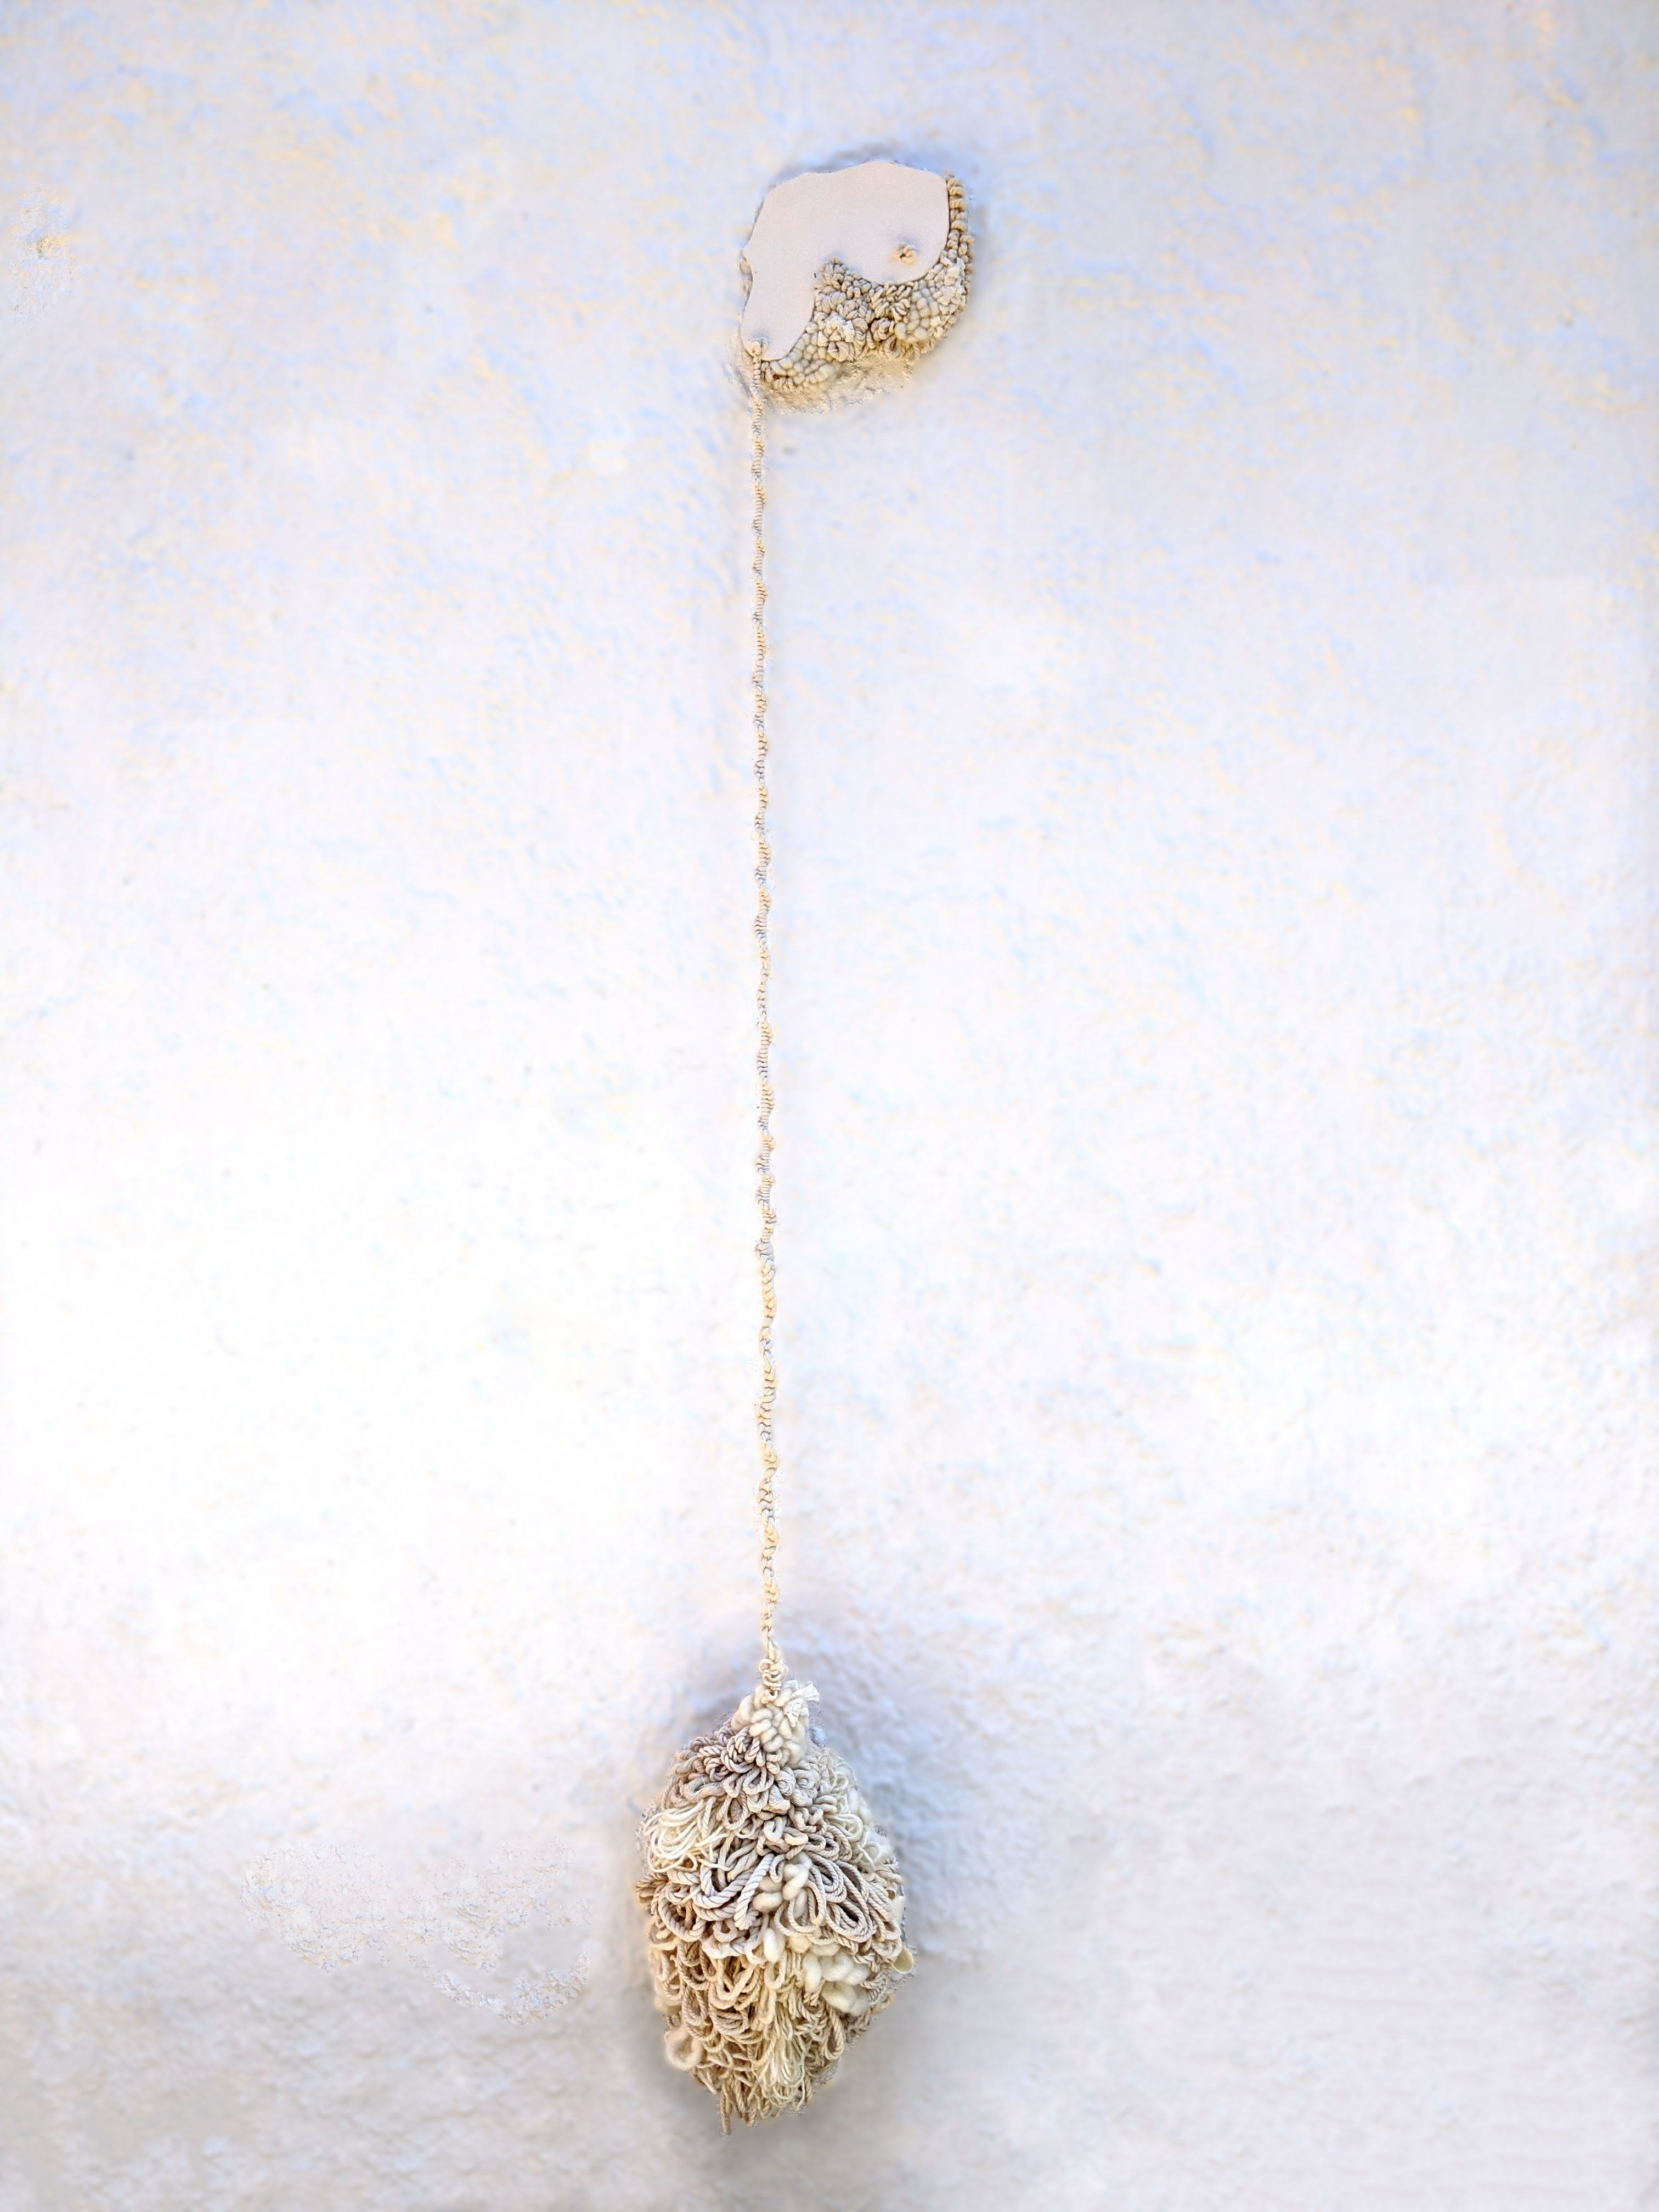 Fiber wall hanging, ball of fiber hanging from ceramic breast